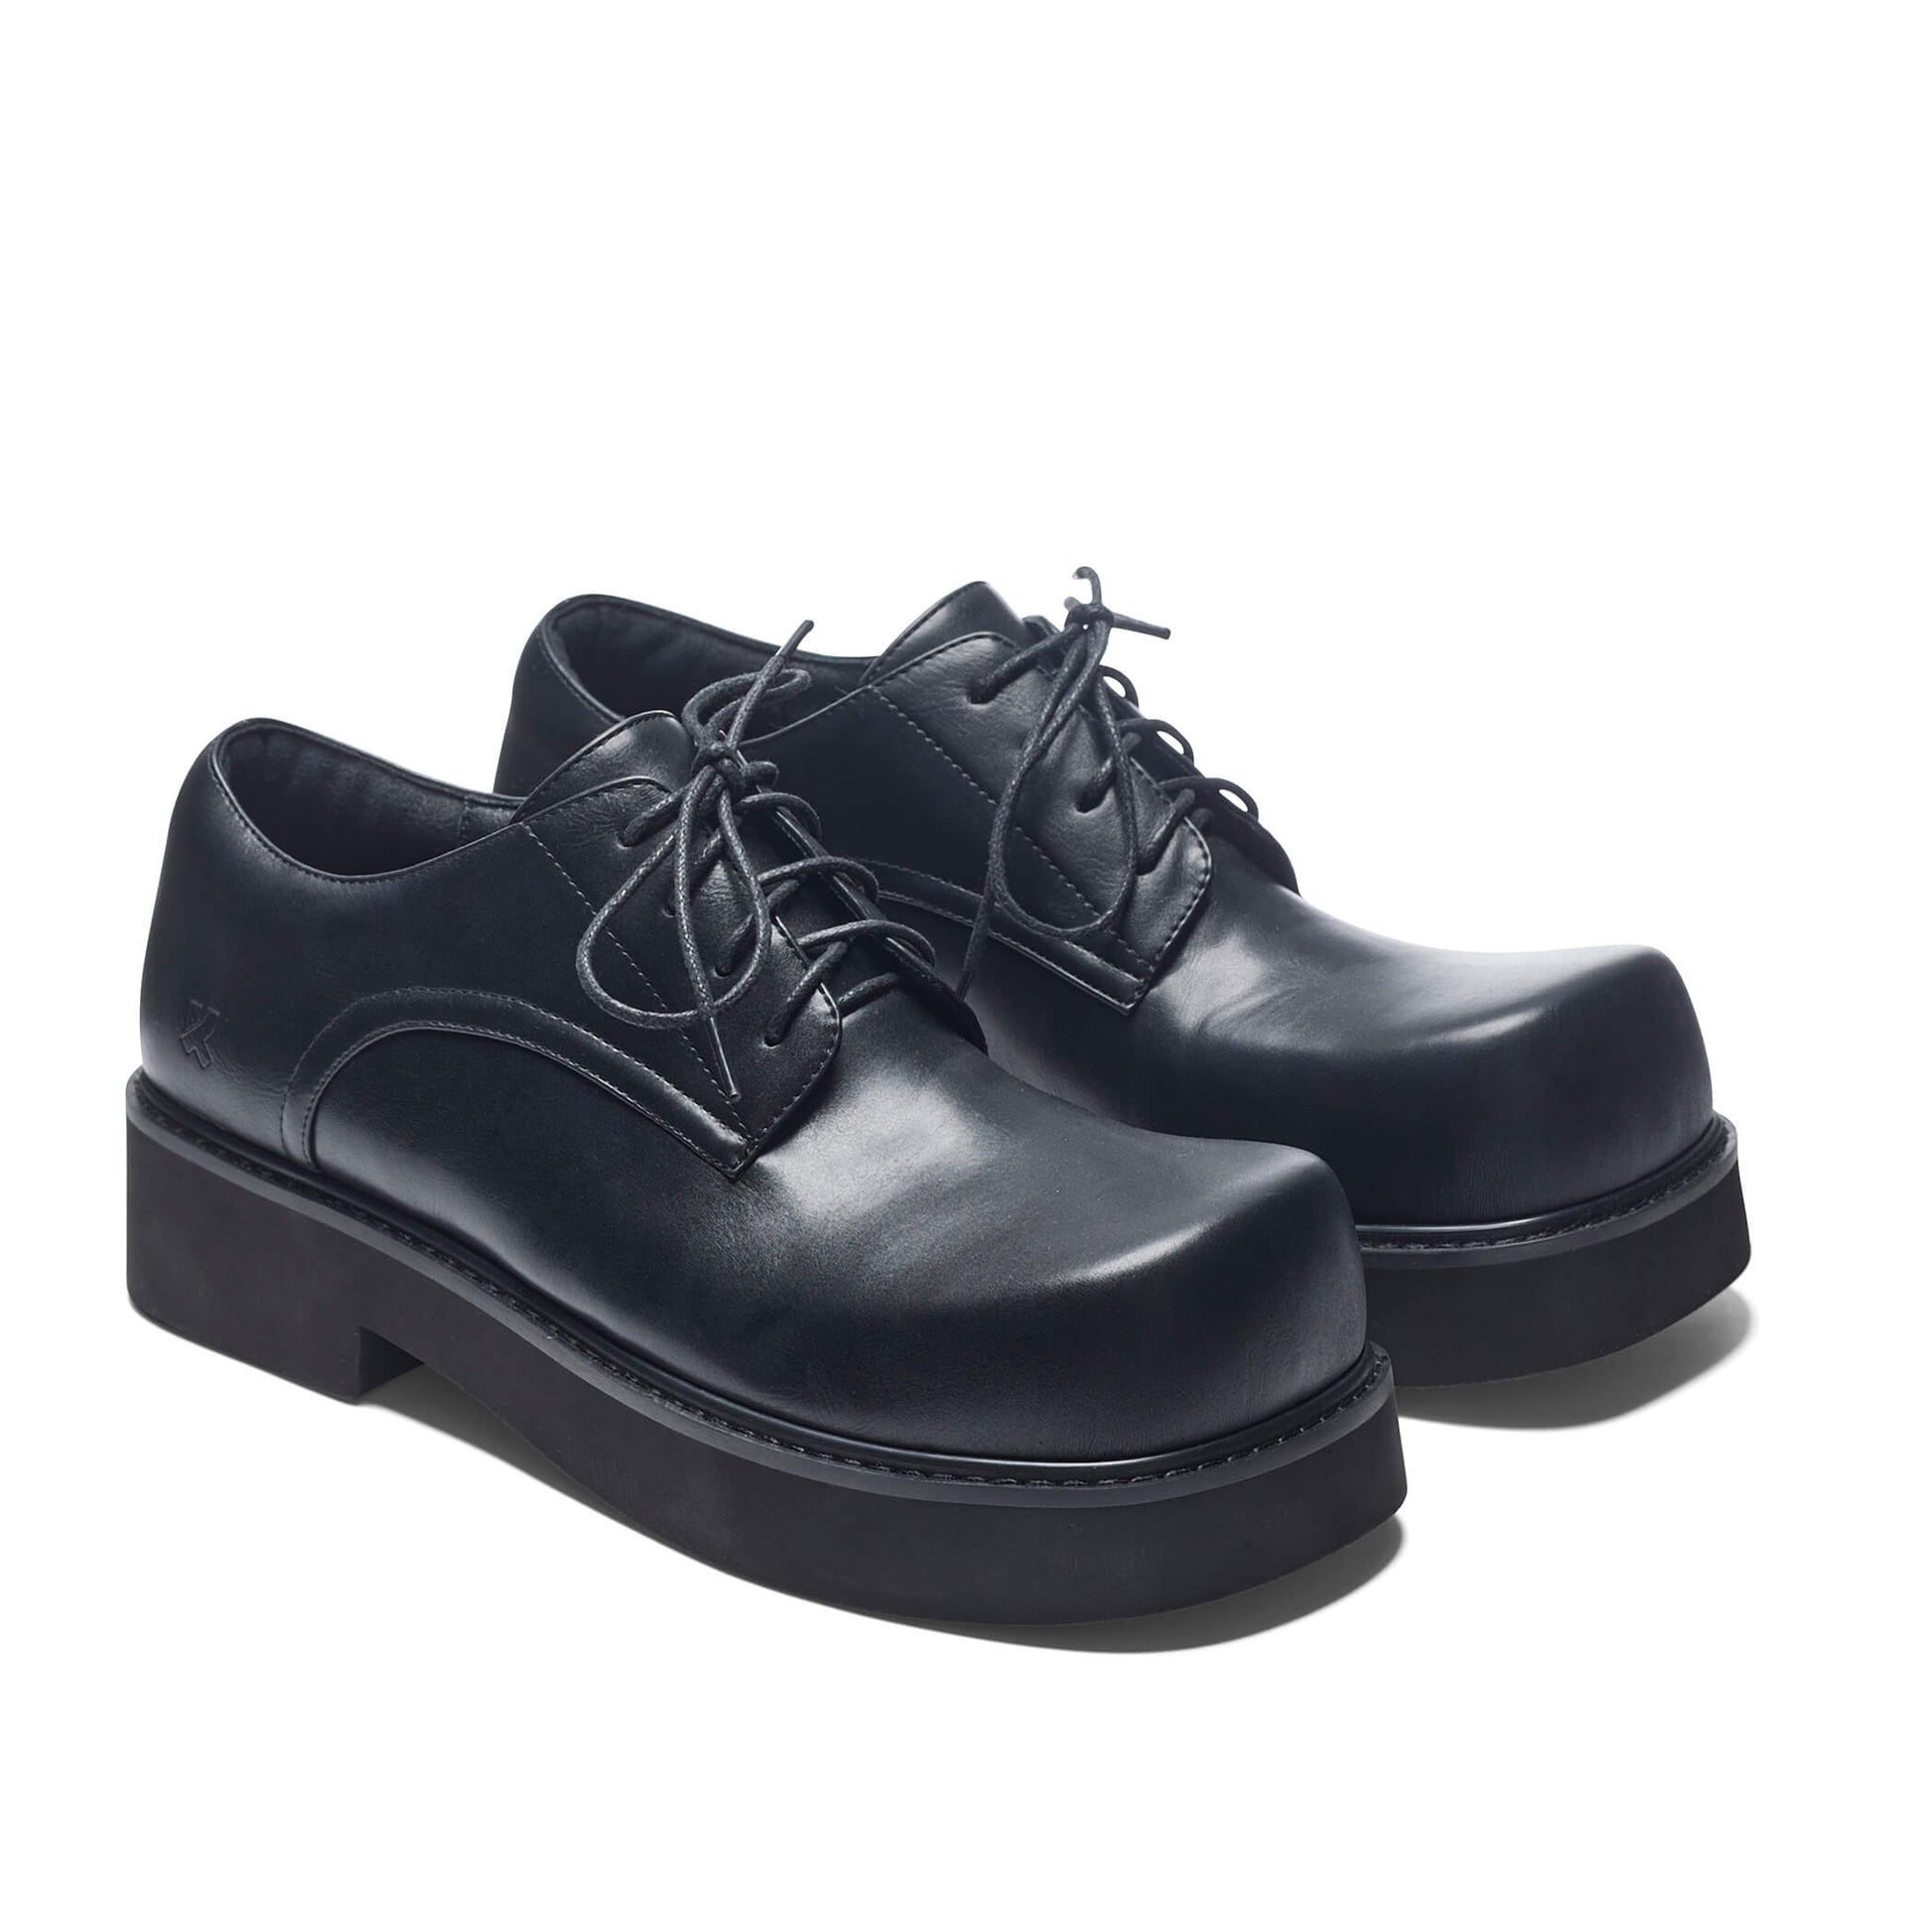 400% Oversized Derby Shoes - Black - Koi Footwear - Three-Quarter View